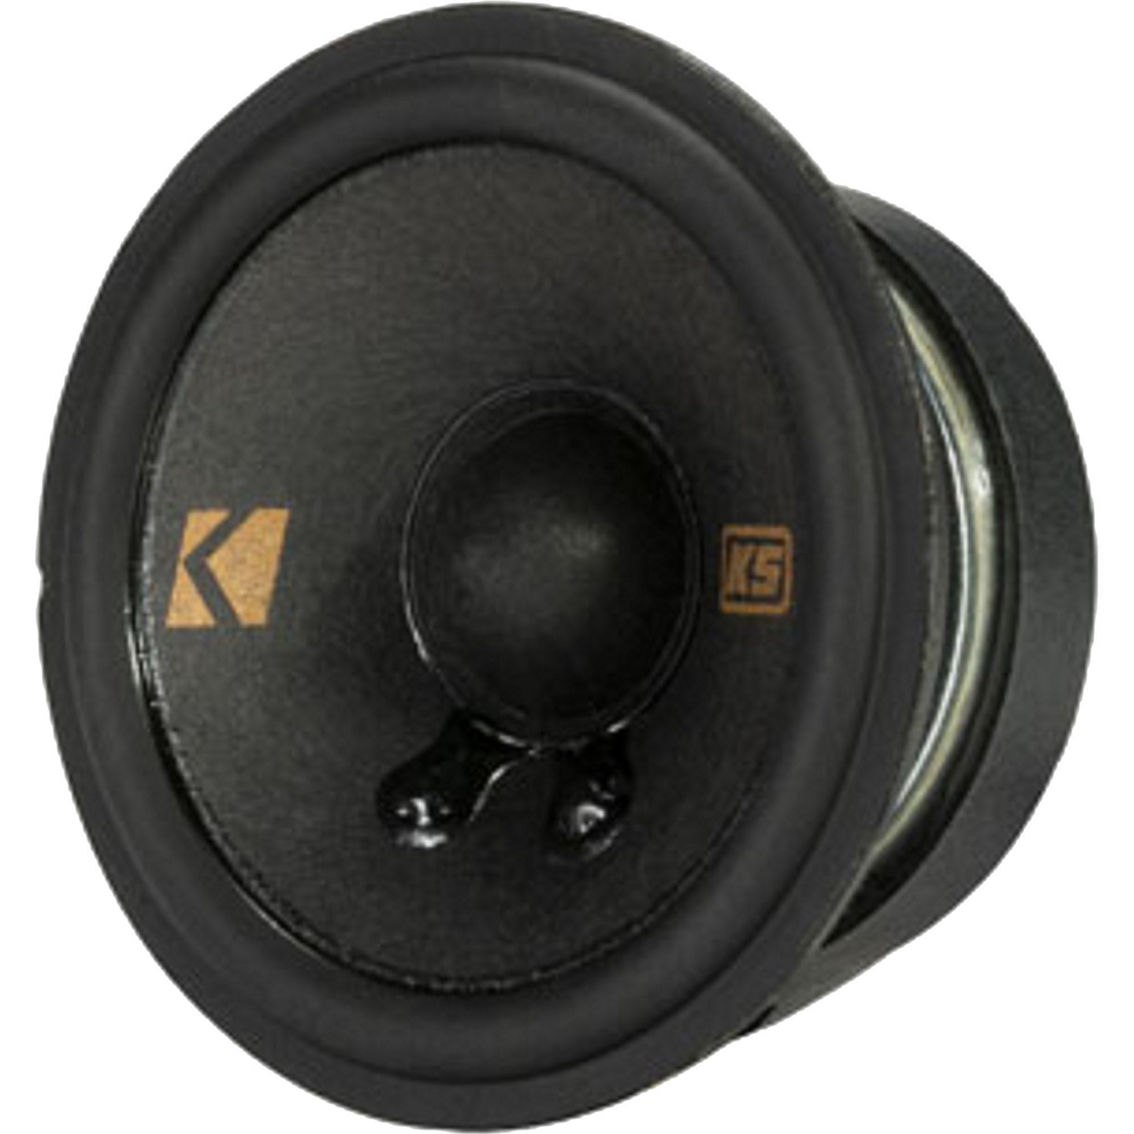 Kicker KSS365 3-Way Component Speaker System - Image 3 of 4